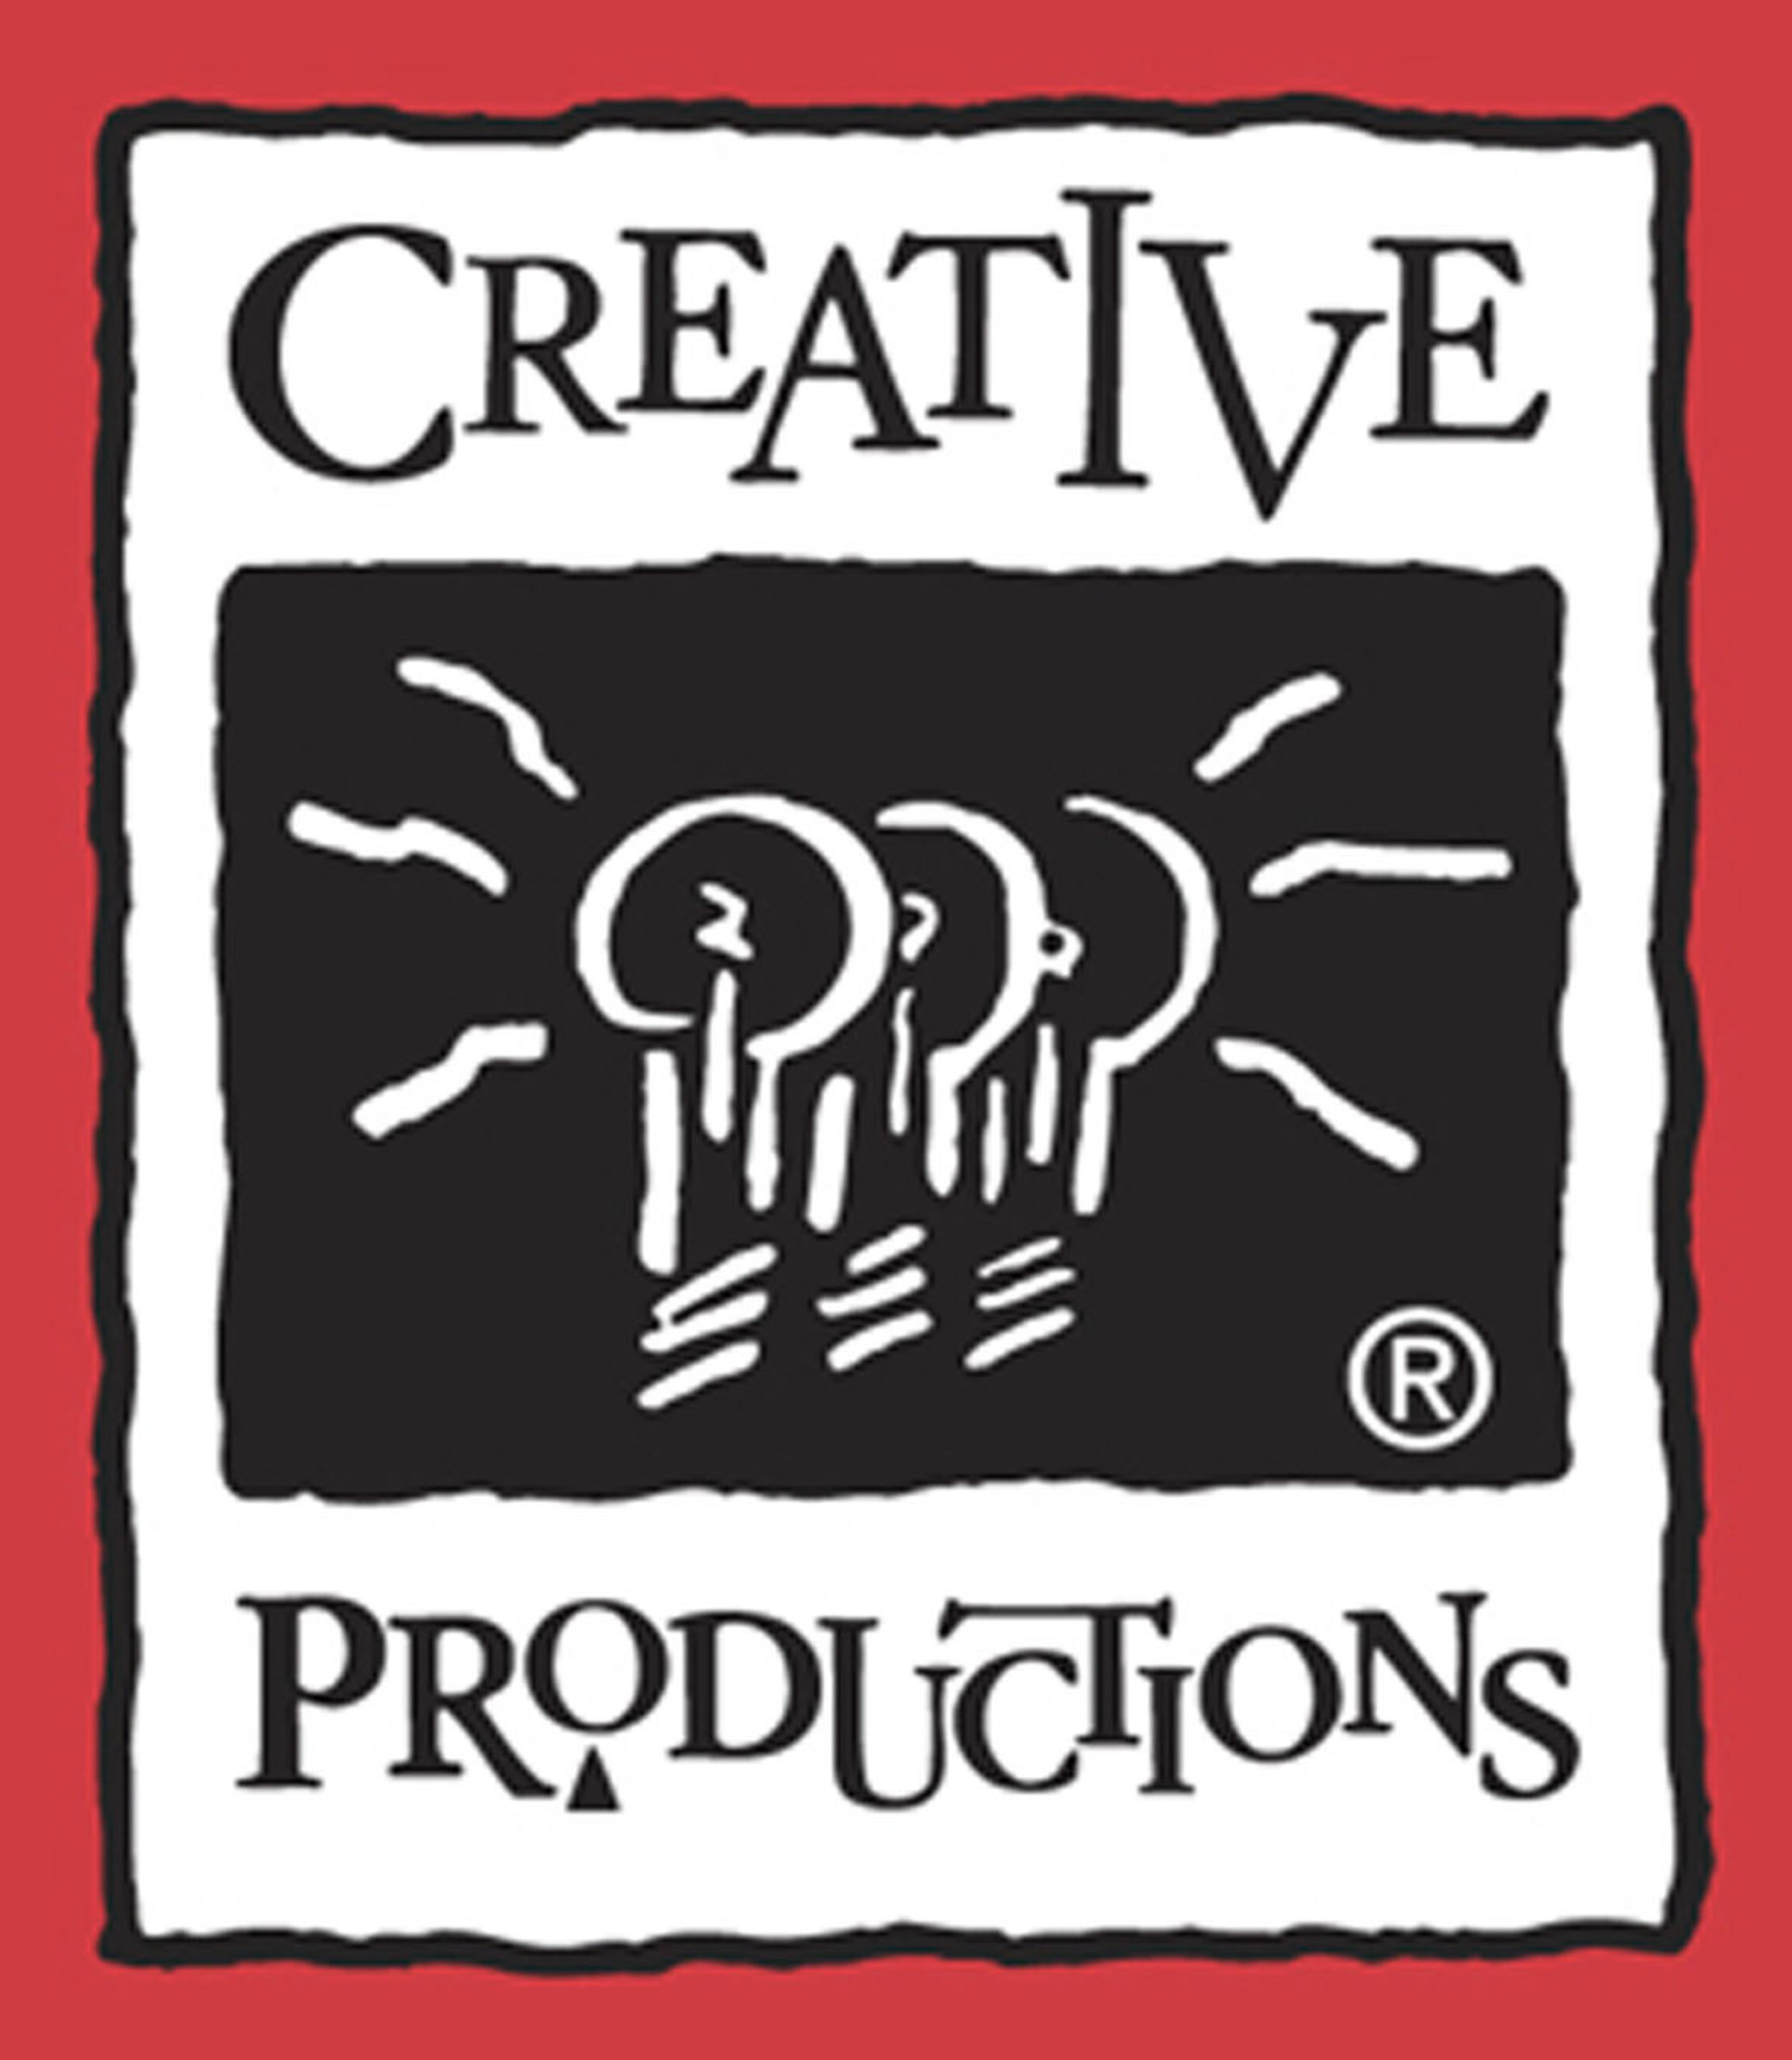 Creative Productions. (PRNewsFoto/Creative Productions) (PRNewsFoto/)